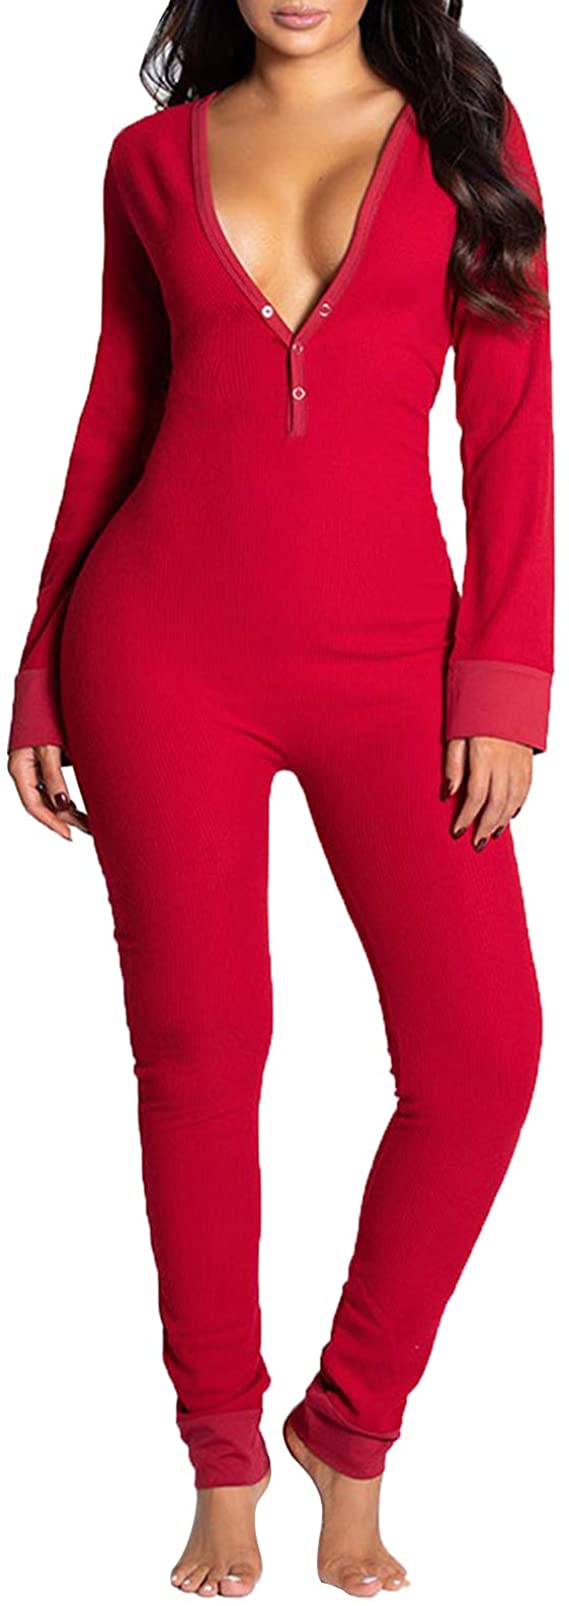 Seyurigaoka Women's Long Romper One Piece Sexy V Neck Bodycon Bodysuit Overall Onesies Pajama Sleepwear Clothes